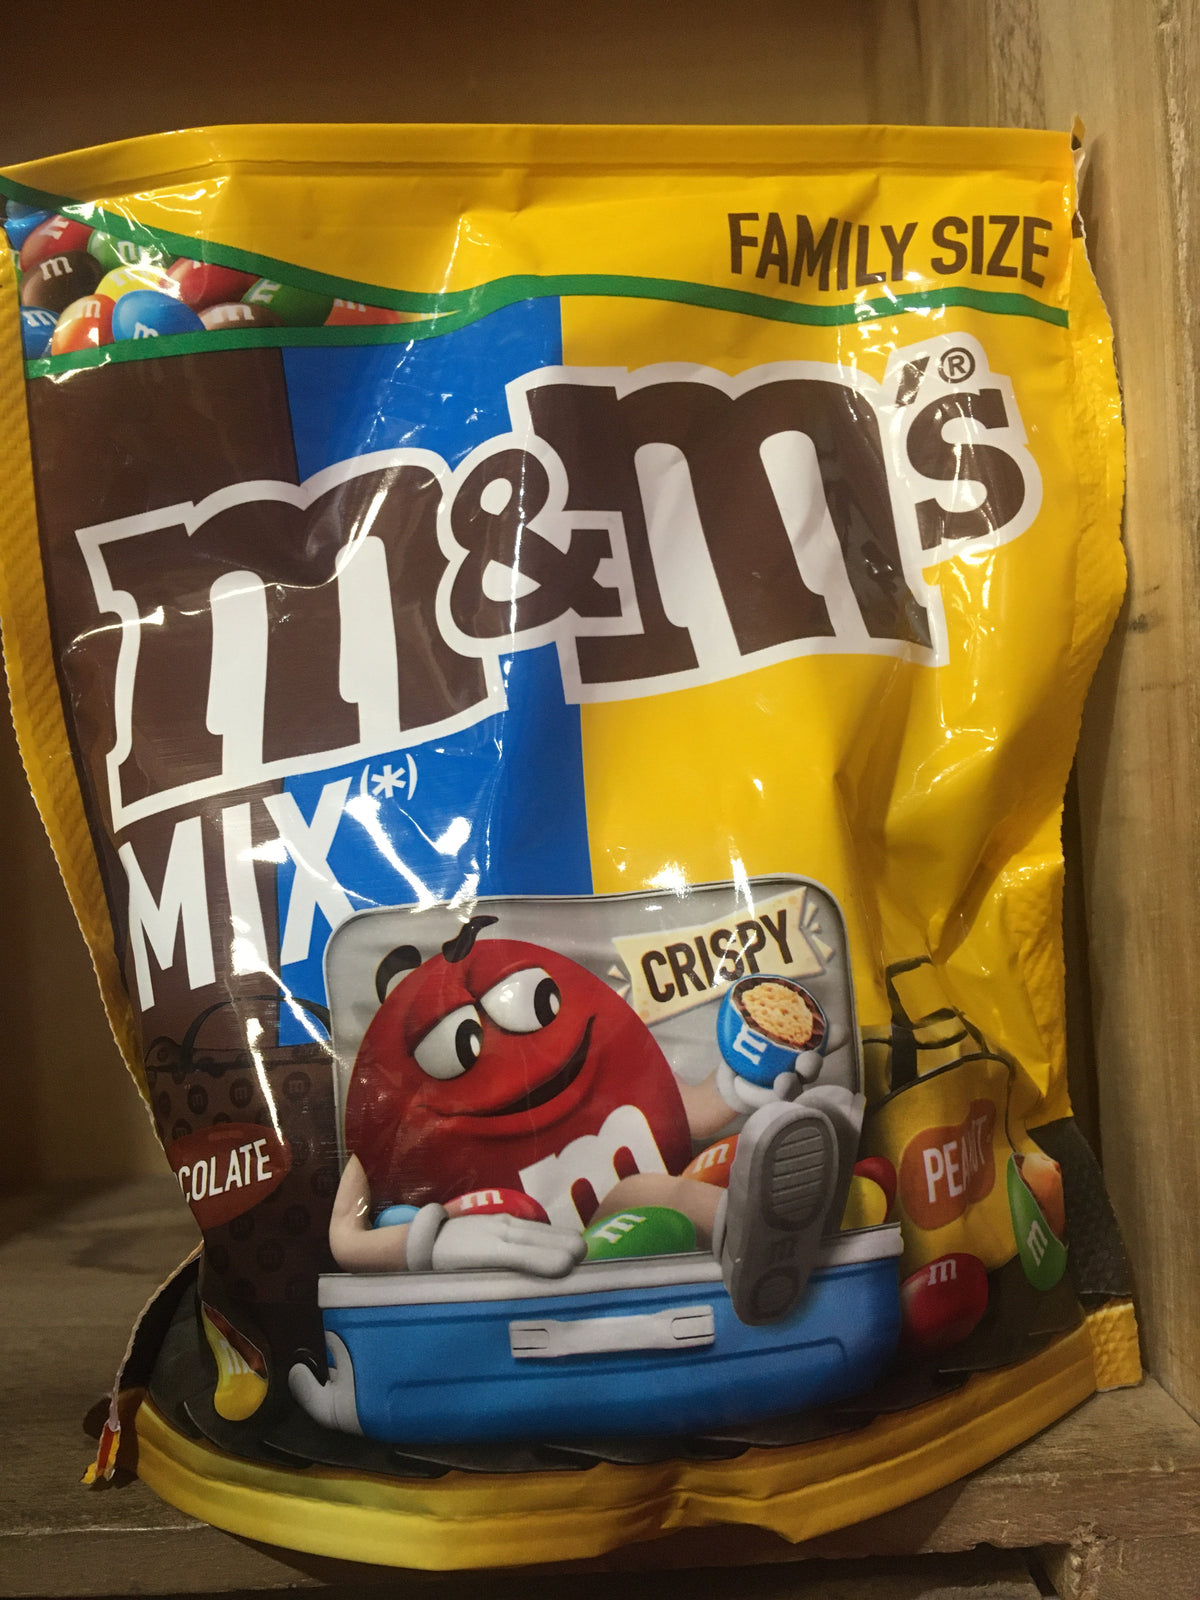 M&M's Crispy Chocolate King Size